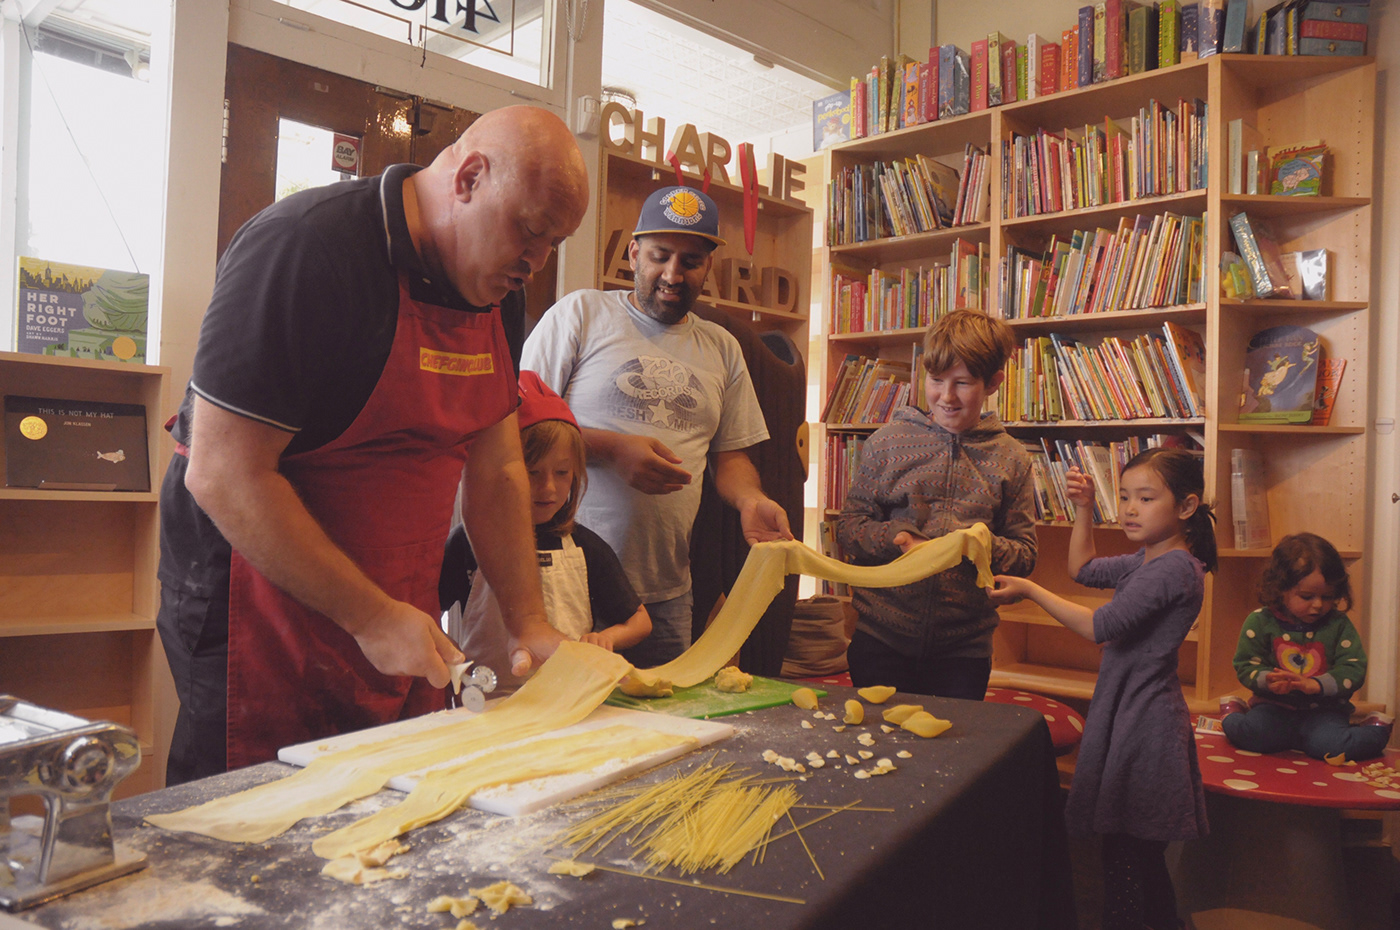 #CHEF GINO #CHARLIES CORNER #pasta #SF   #NOE VALLEY #LOCAL INDEPENDENT BOOKSTORE #homemade